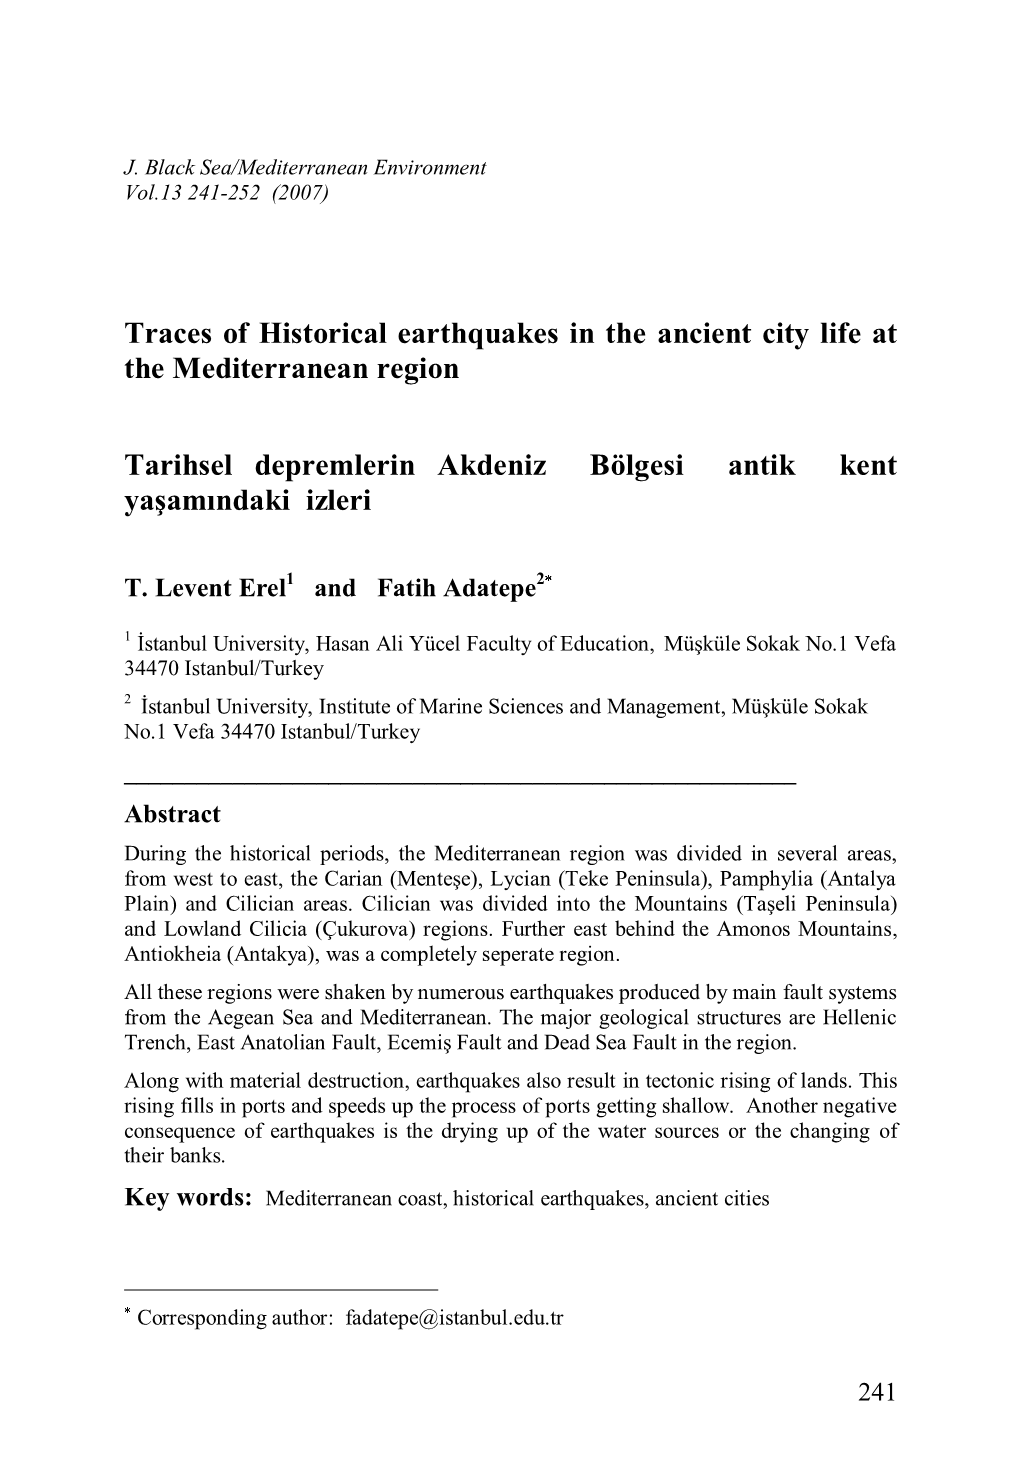 Historical Earthquakes Affecting Urban Life Along the Mediterranean Coast of Turkey, International Earthquake Symposium 22-24 October, 2007, P.31, Kocaeli